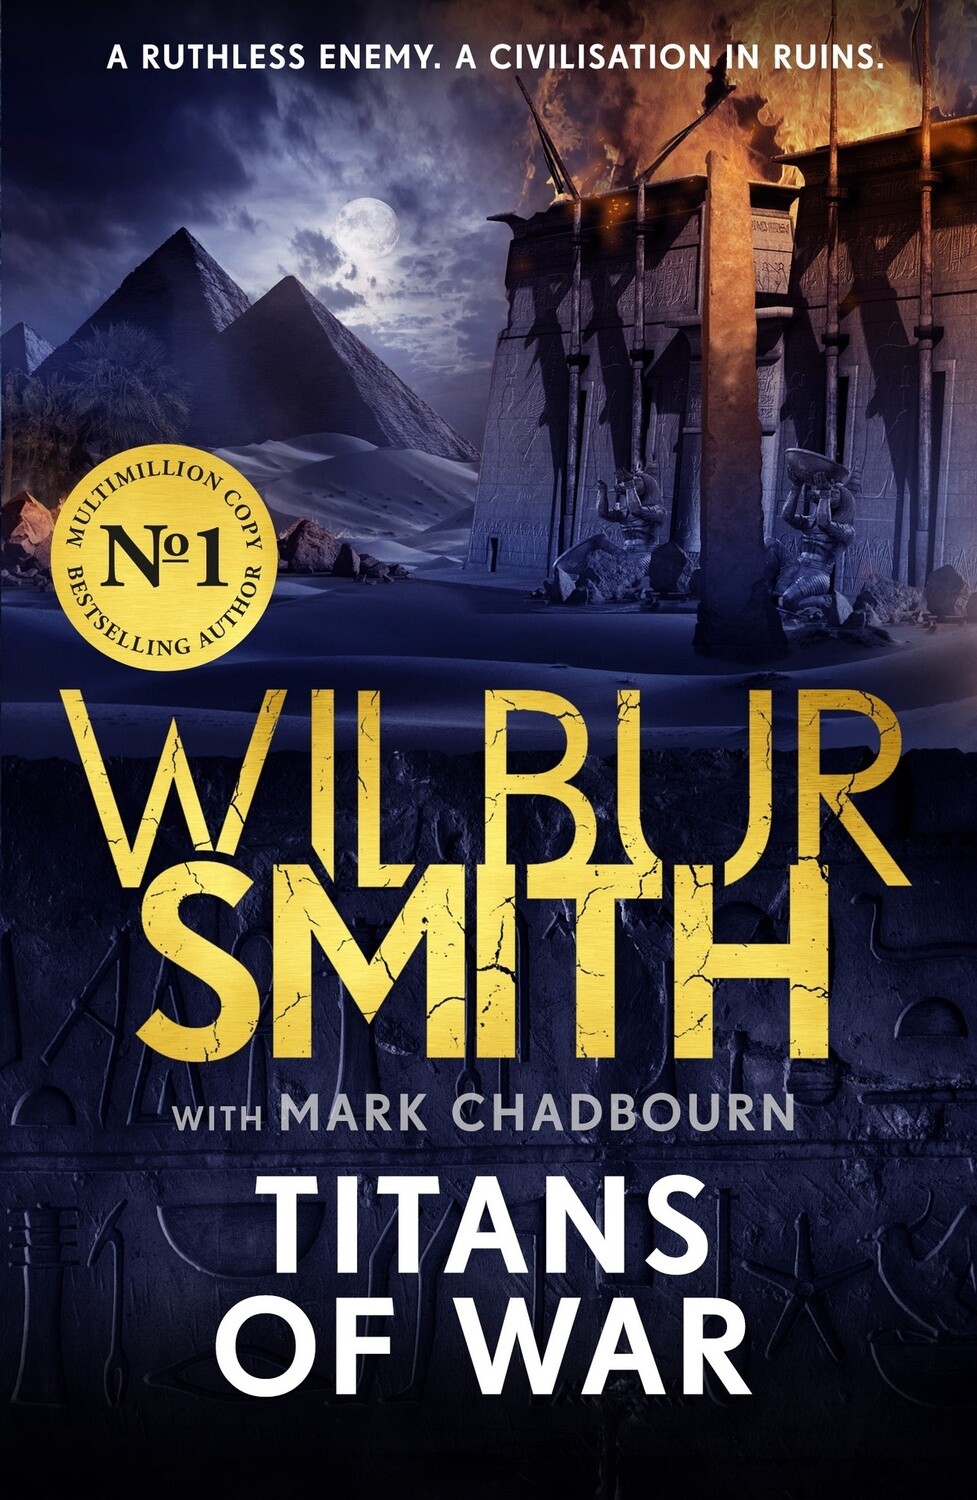 Titans of War by Wilbur Smith & Mark Chadbourn